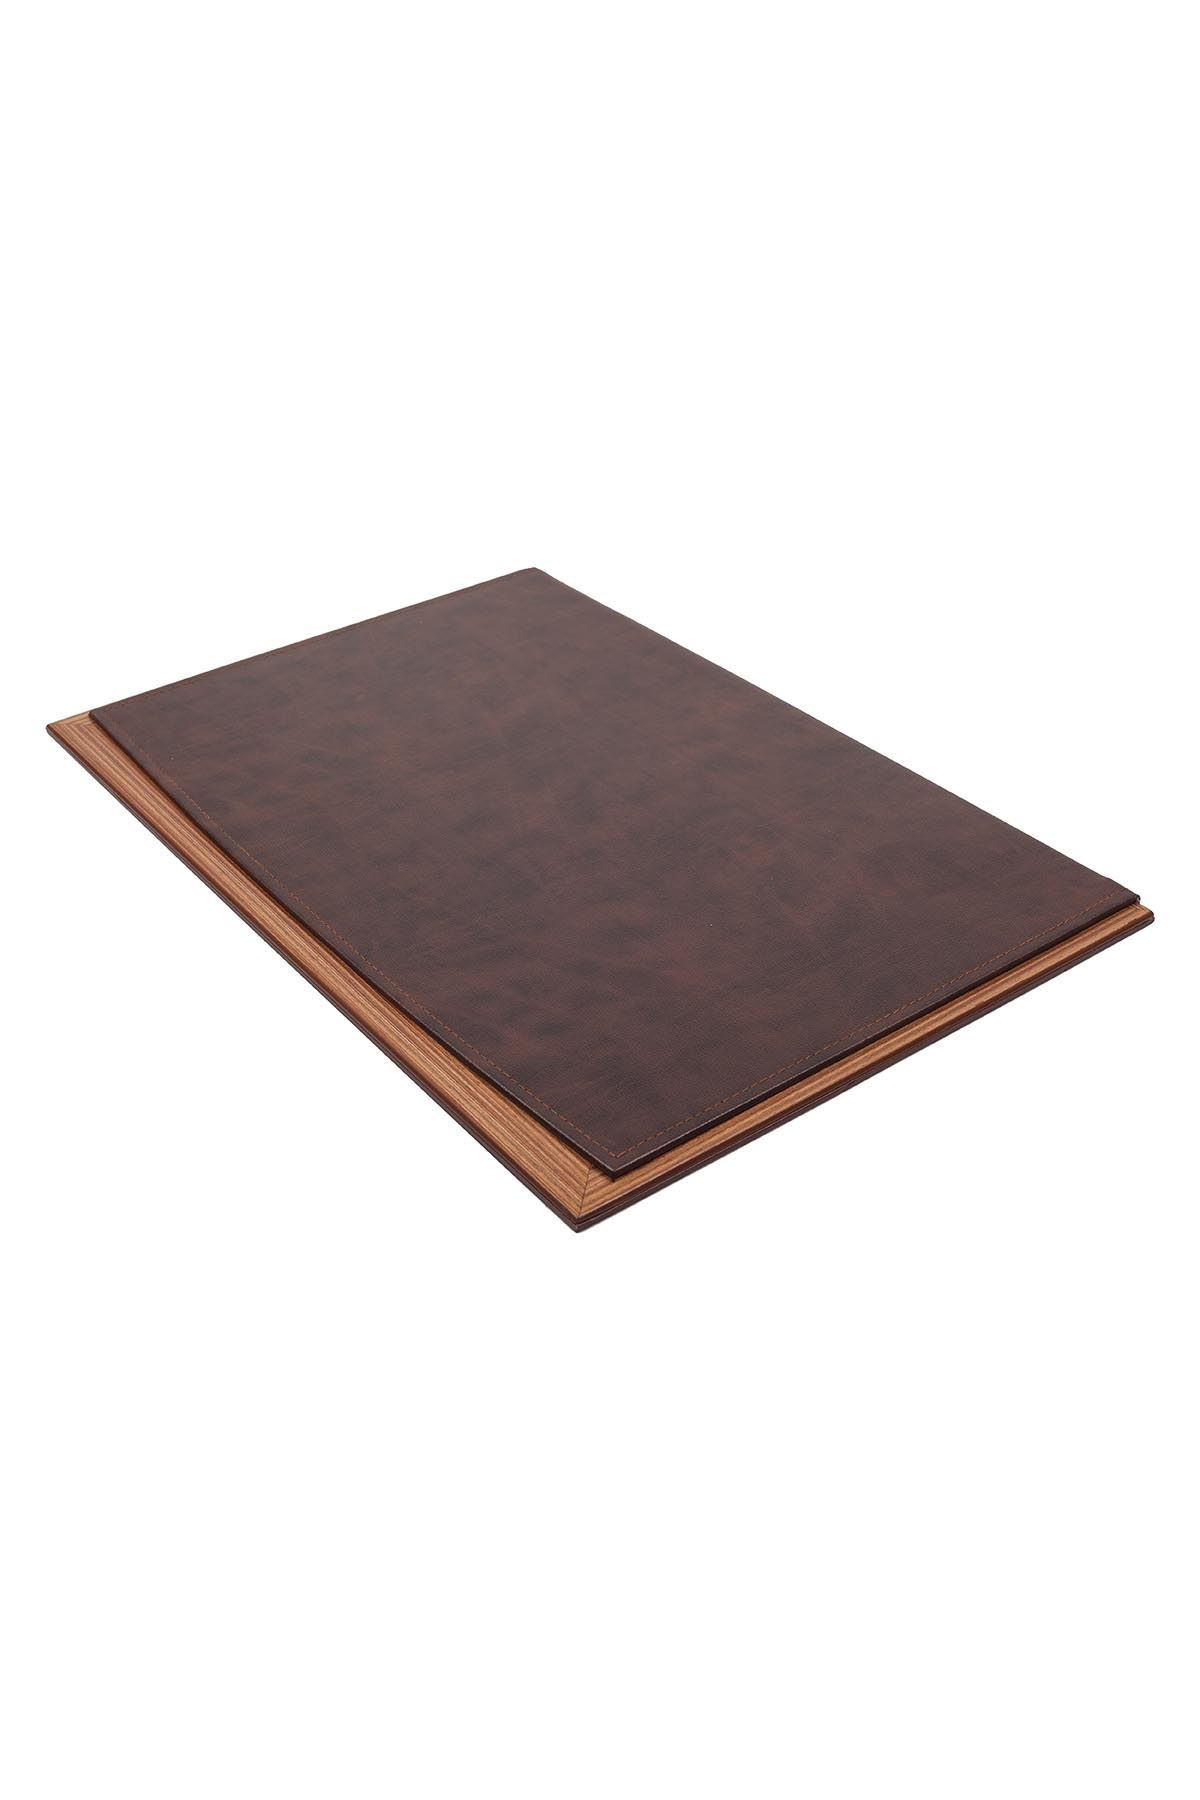 Star Lux Leather Desk Set Brown 10 Accessories